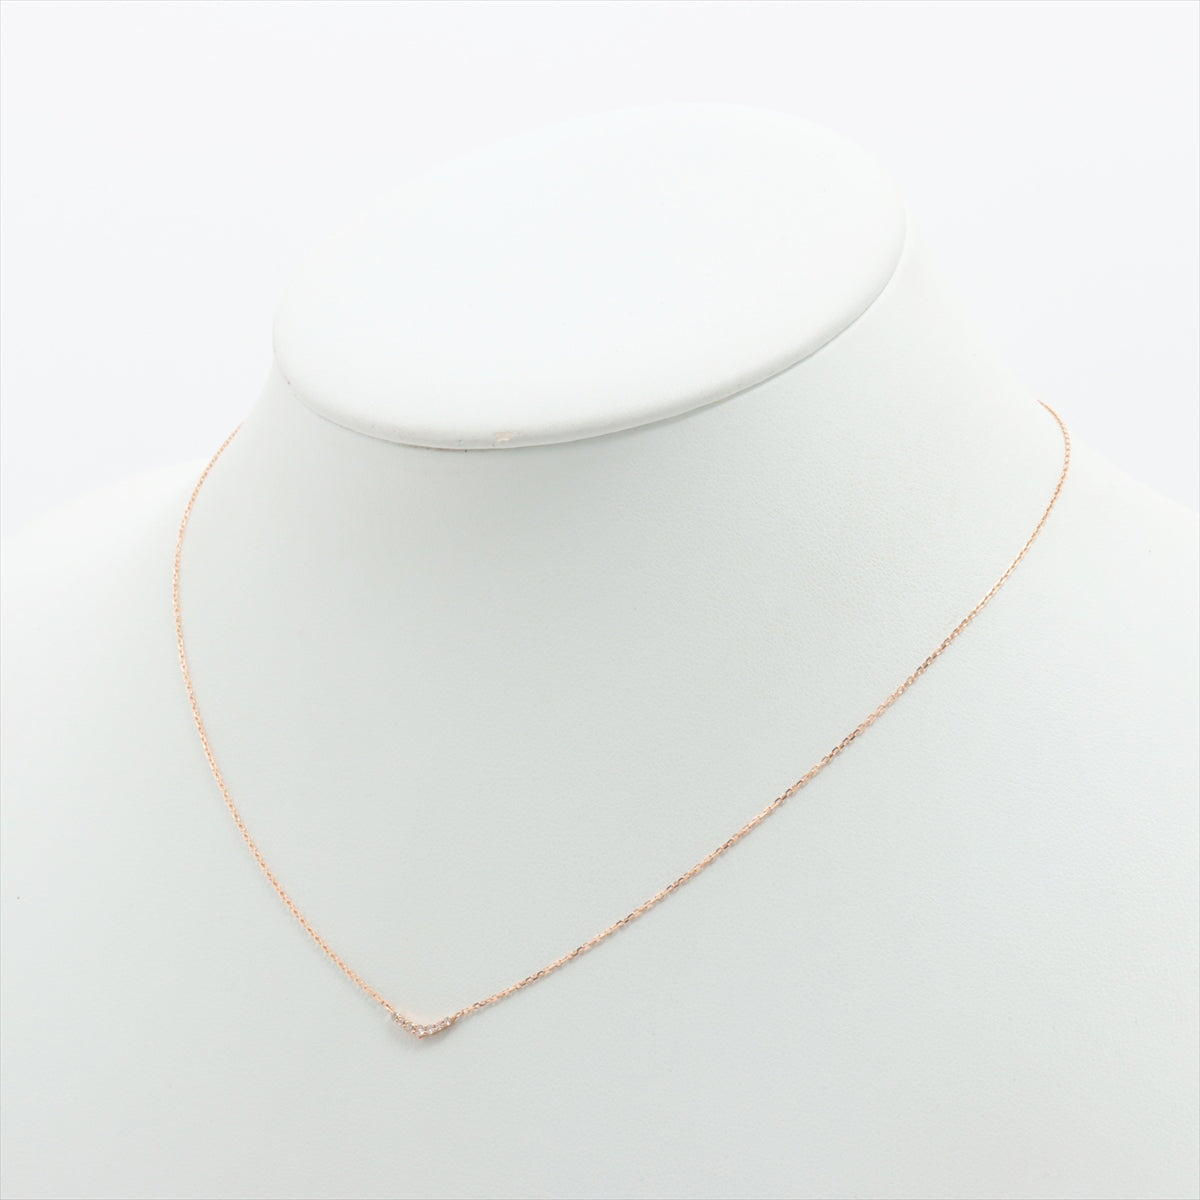 Agat diamond necklace K10 (YG) 0.8g 0.05 E